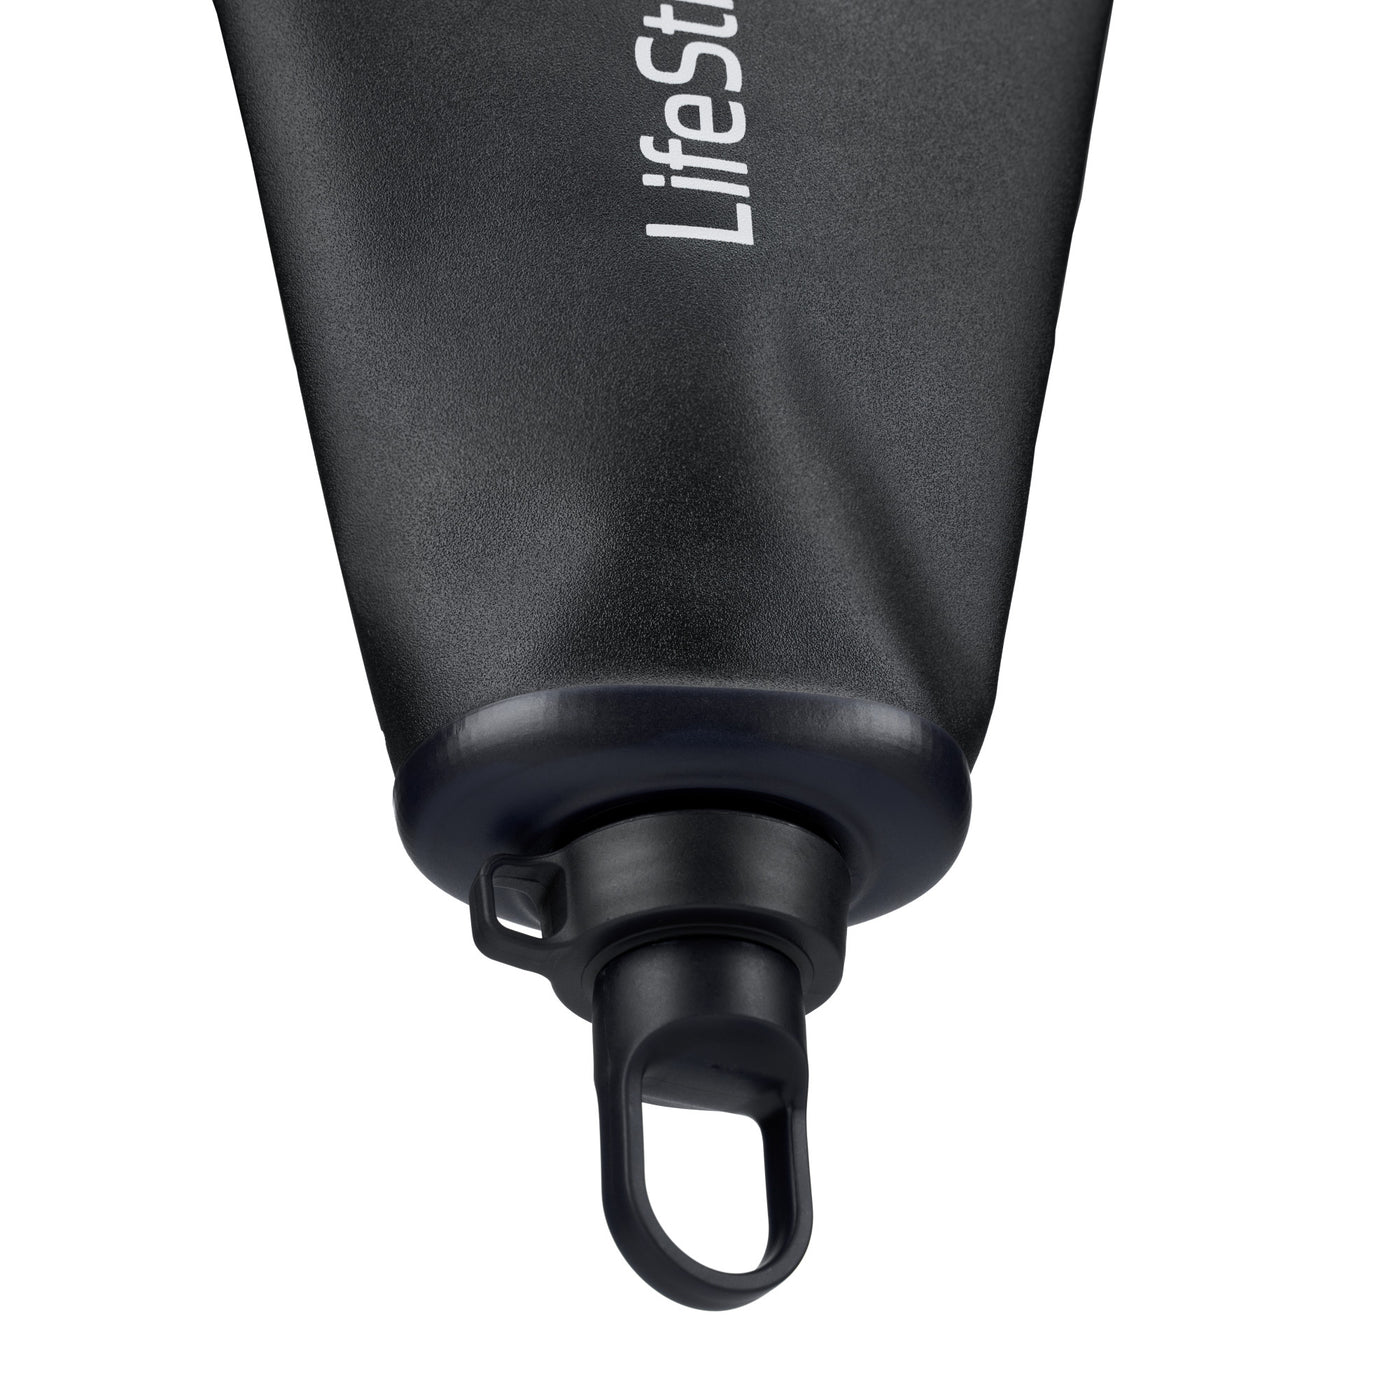 LifeStraw Peak Compact Gravity Water Filter System - 3L